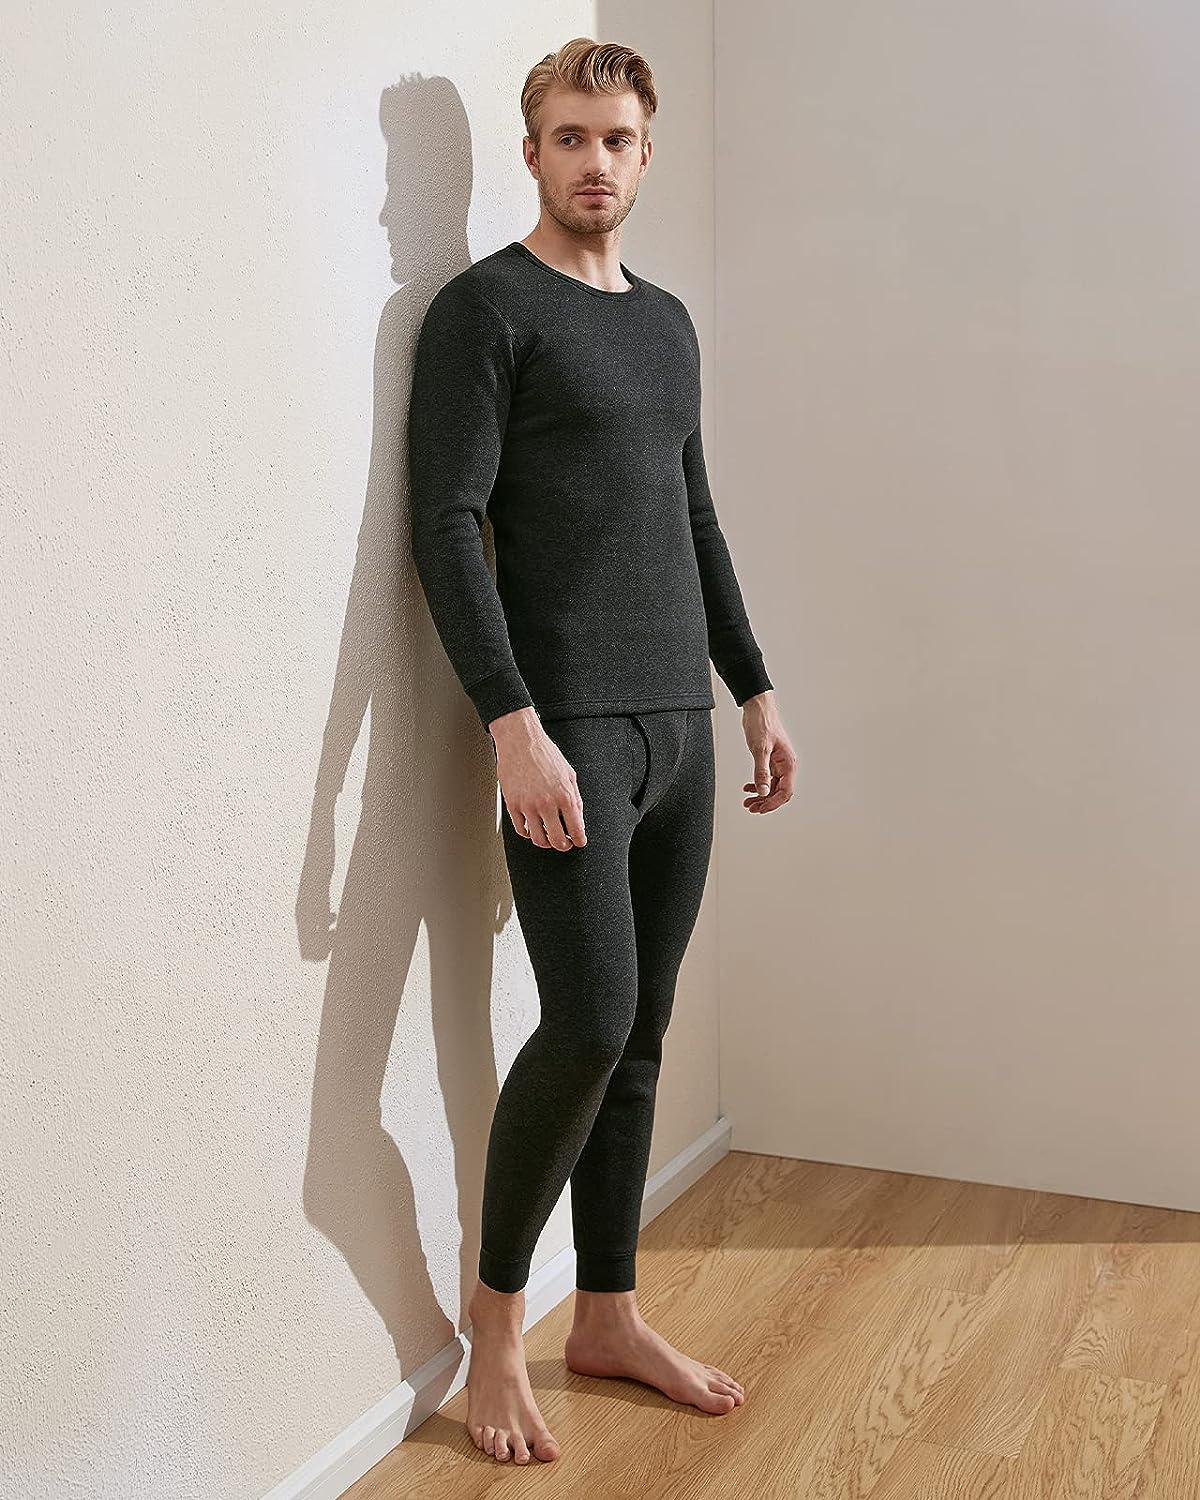 Men Winter Fleece Lined 100% Cotton Thermal Long Johns Top Bottom Underwear  Set 